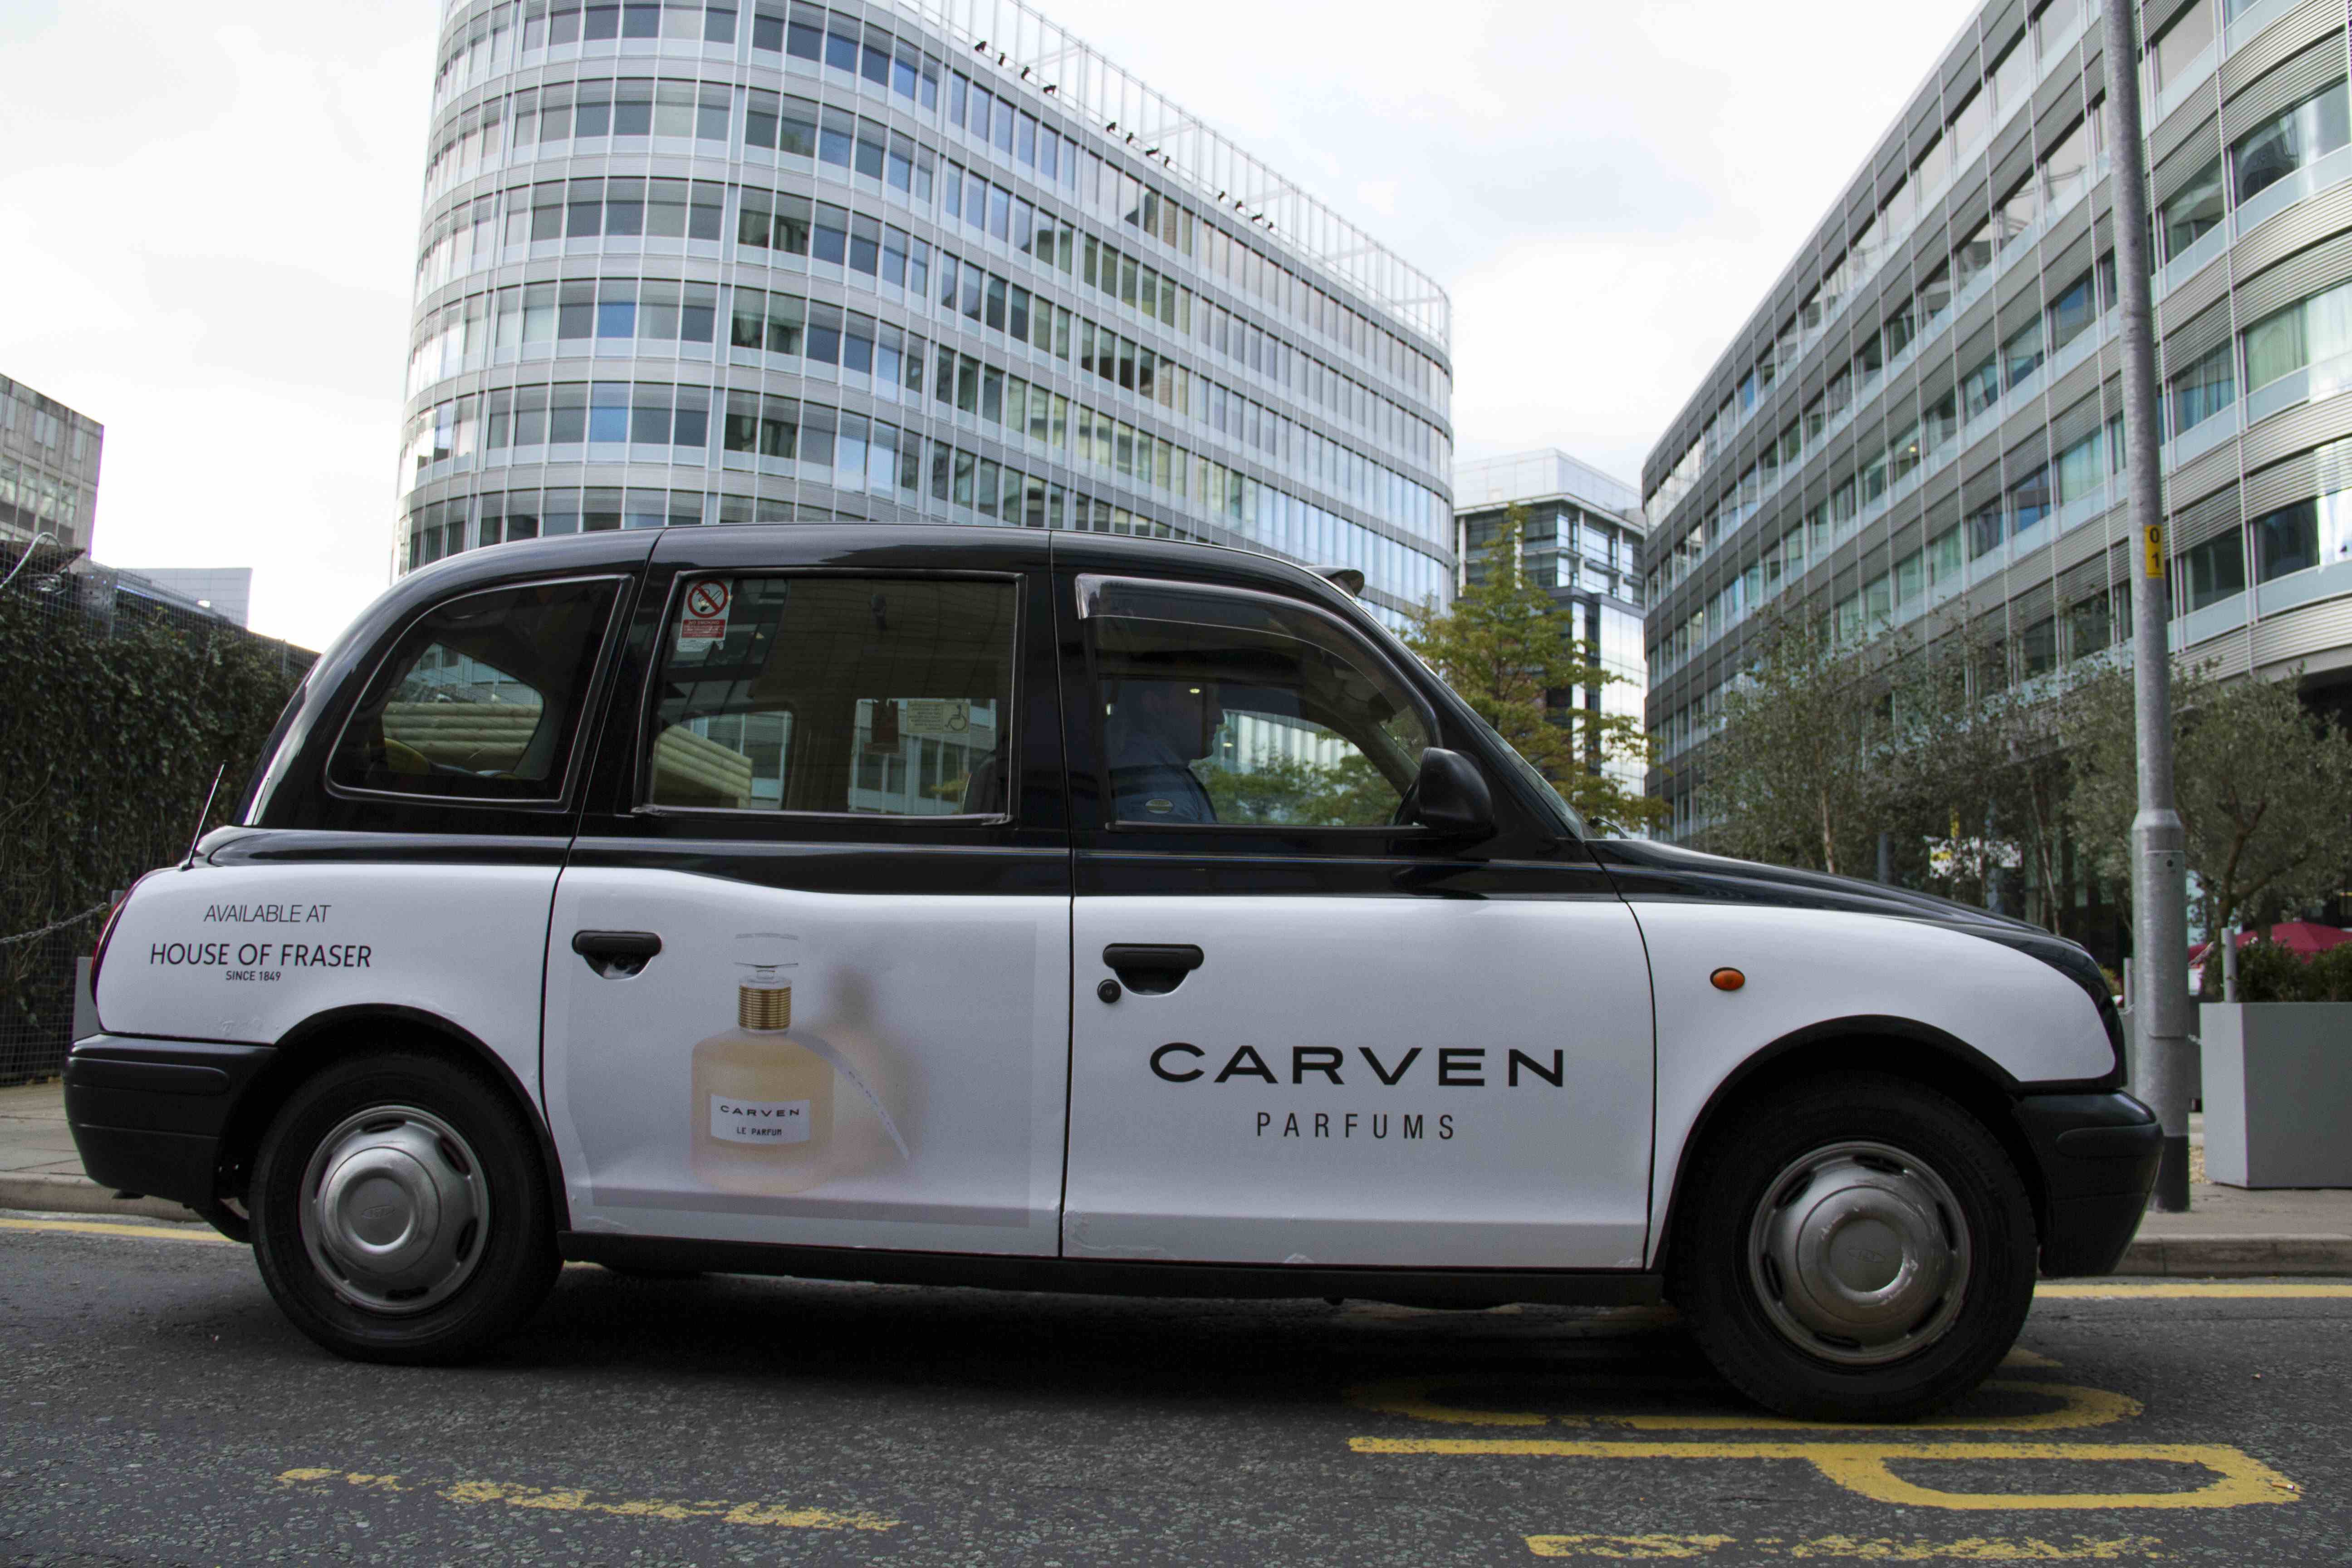 2013 Ubiquitous taxi advertising campaign for Carven - Carven Parfums